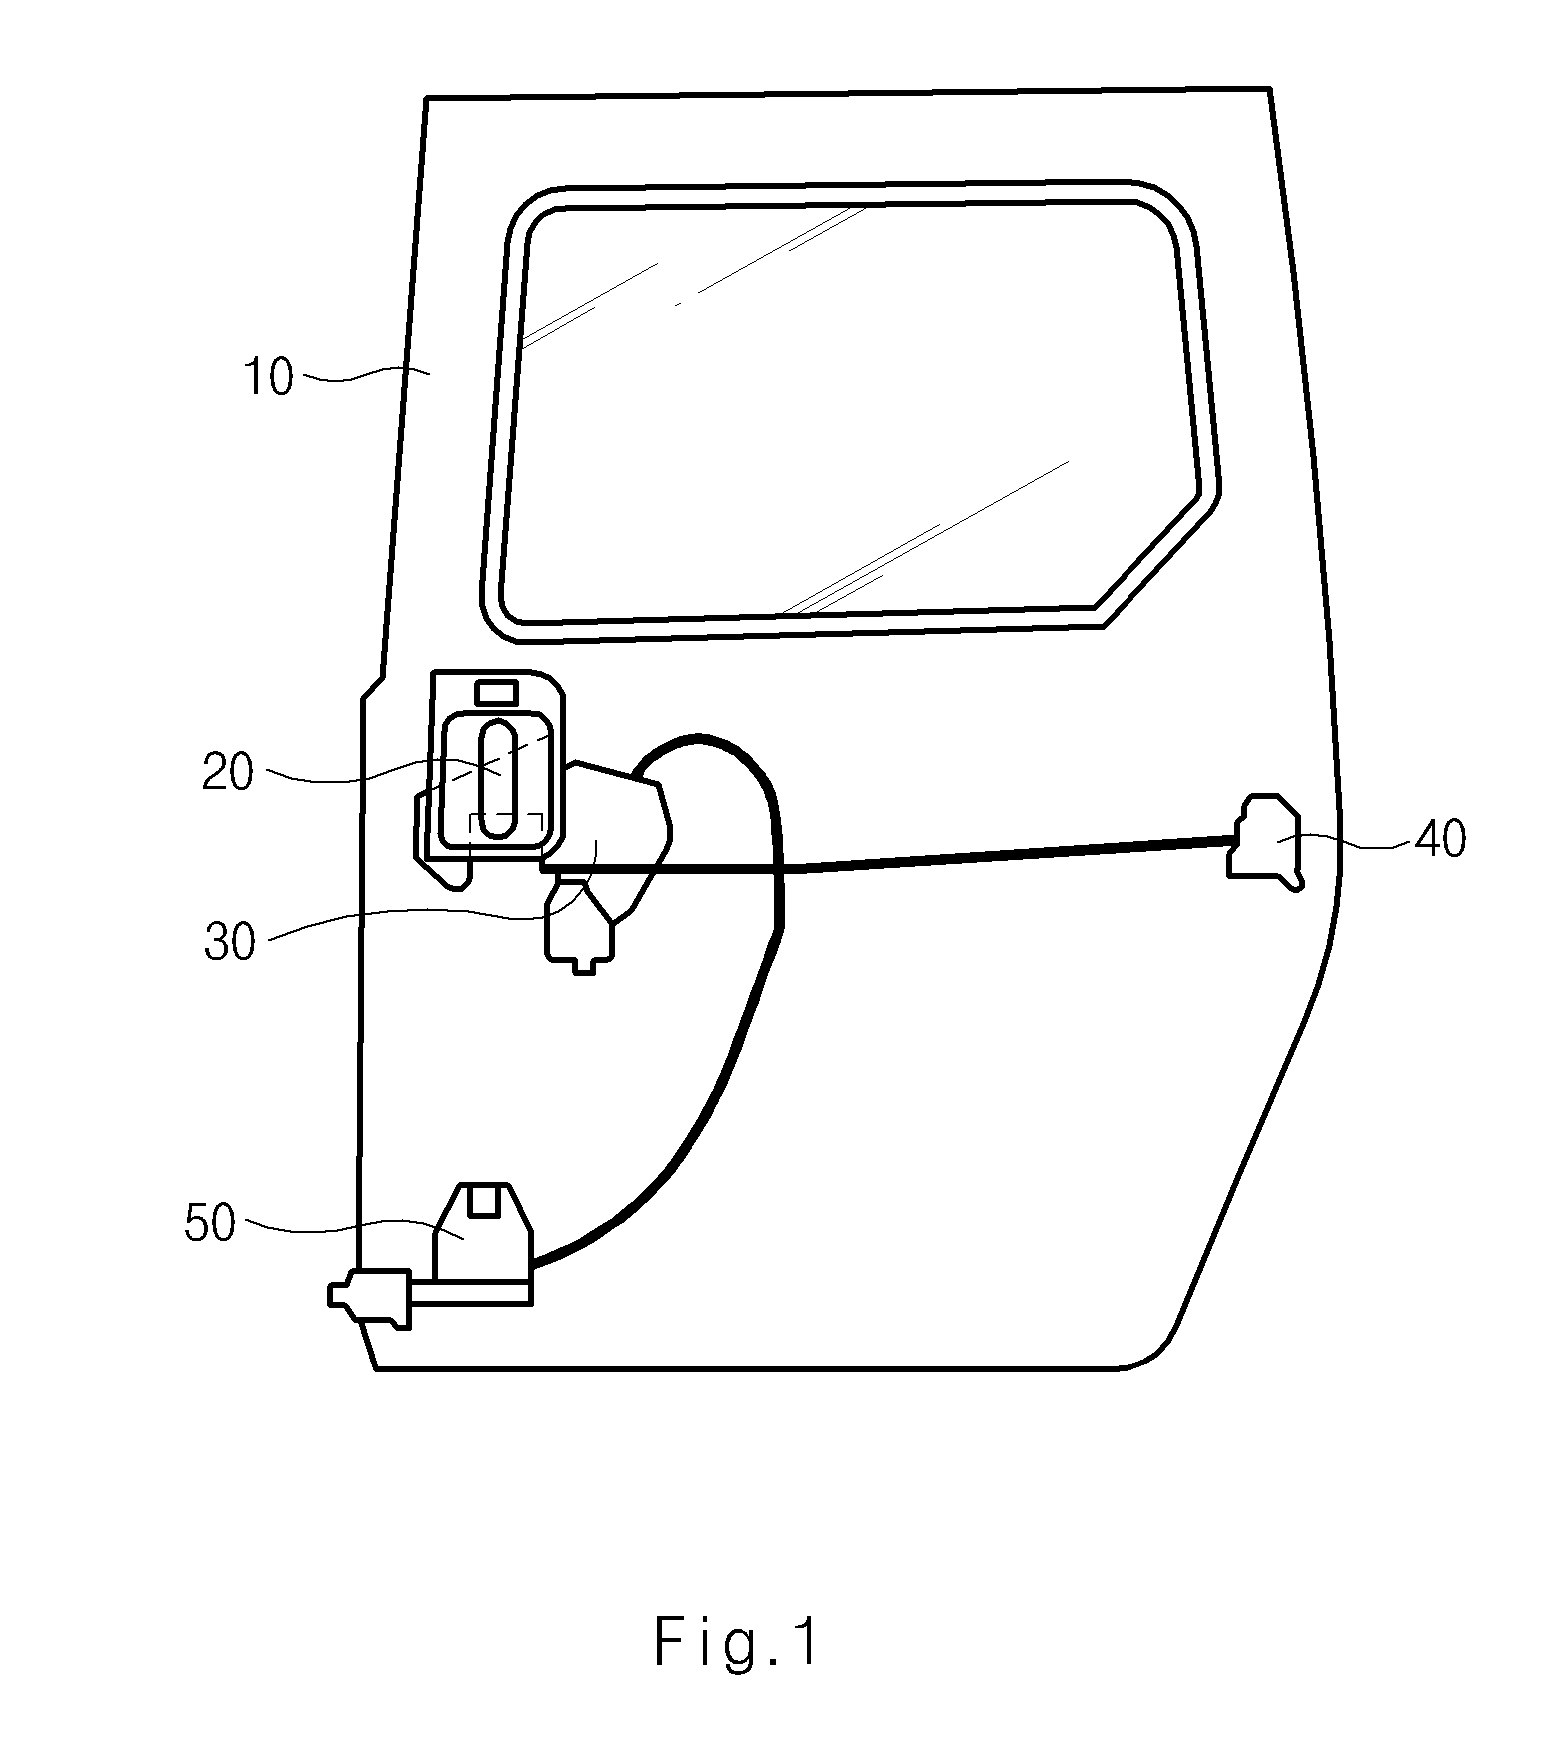 Locking controller structure of sliding door